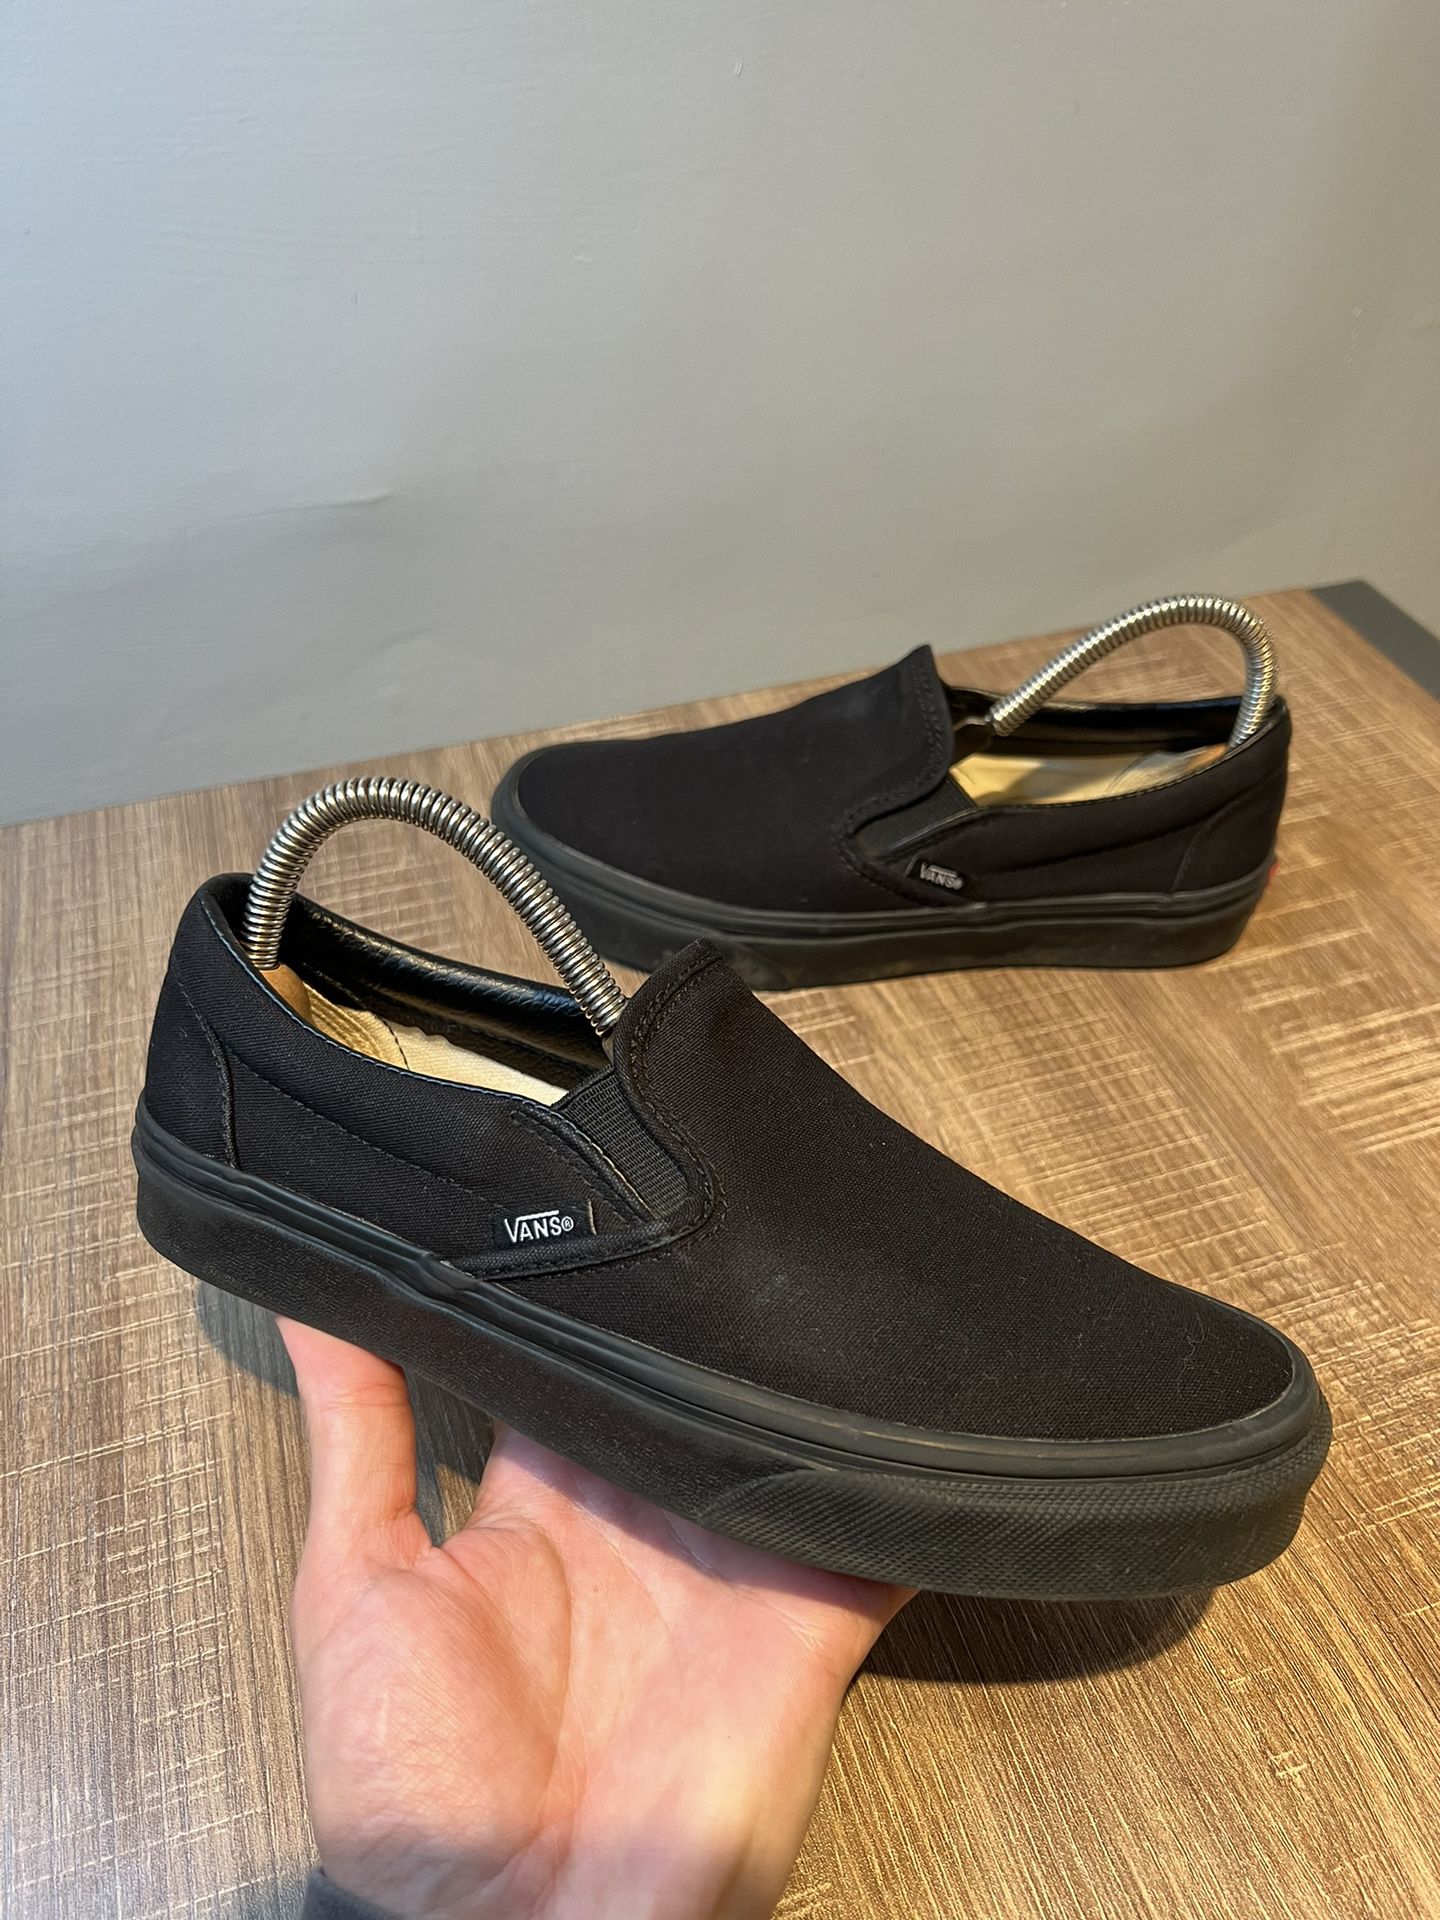 Vans Classic Slip-On Skateboarding Shoes Triple Black Gum Womens Size 7.5